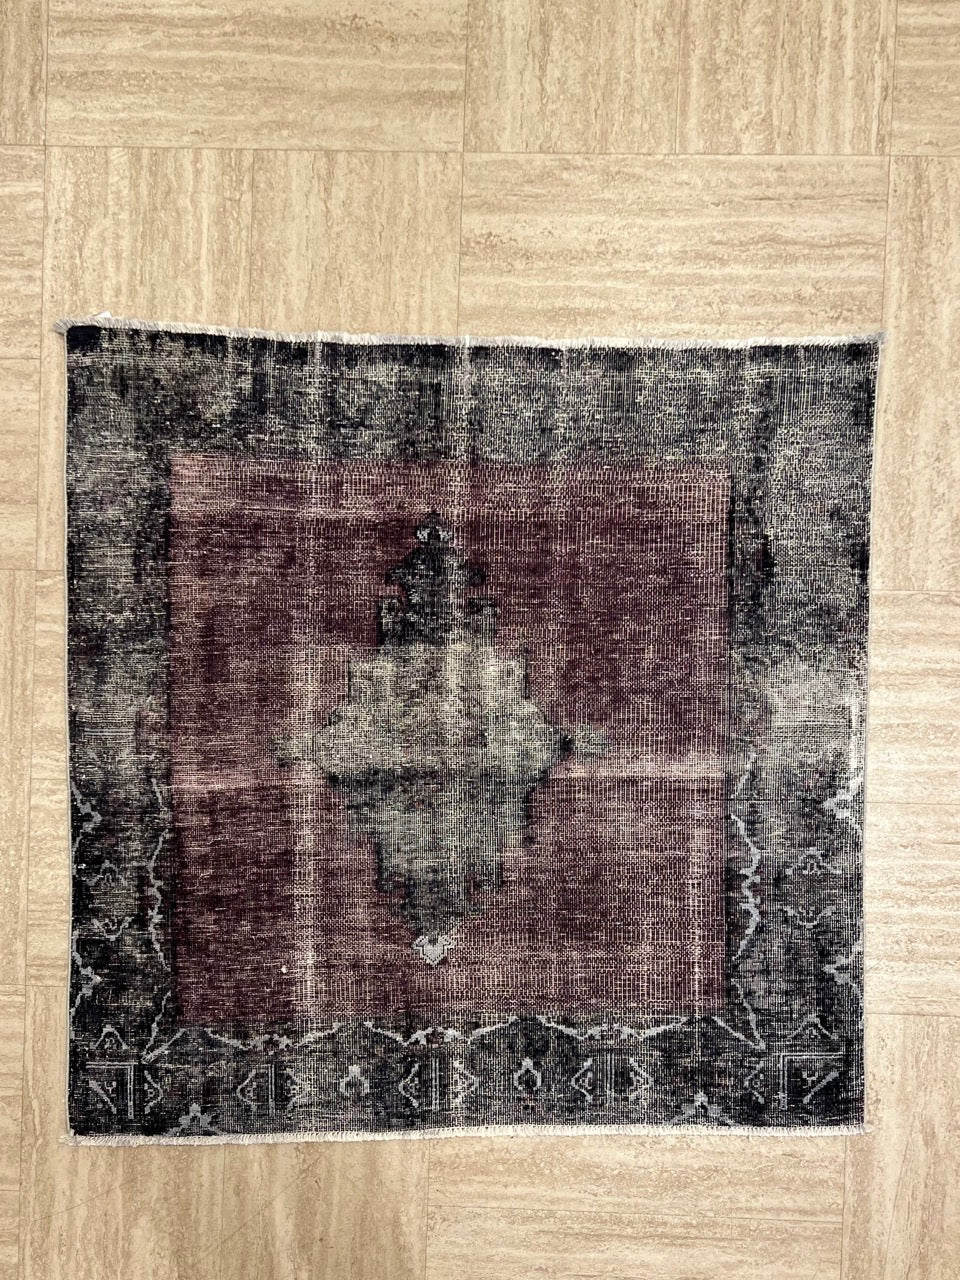 Handmade Square Rug Vintage Black And Burgundy Pakistan Wool Carpet product image #27556022583466